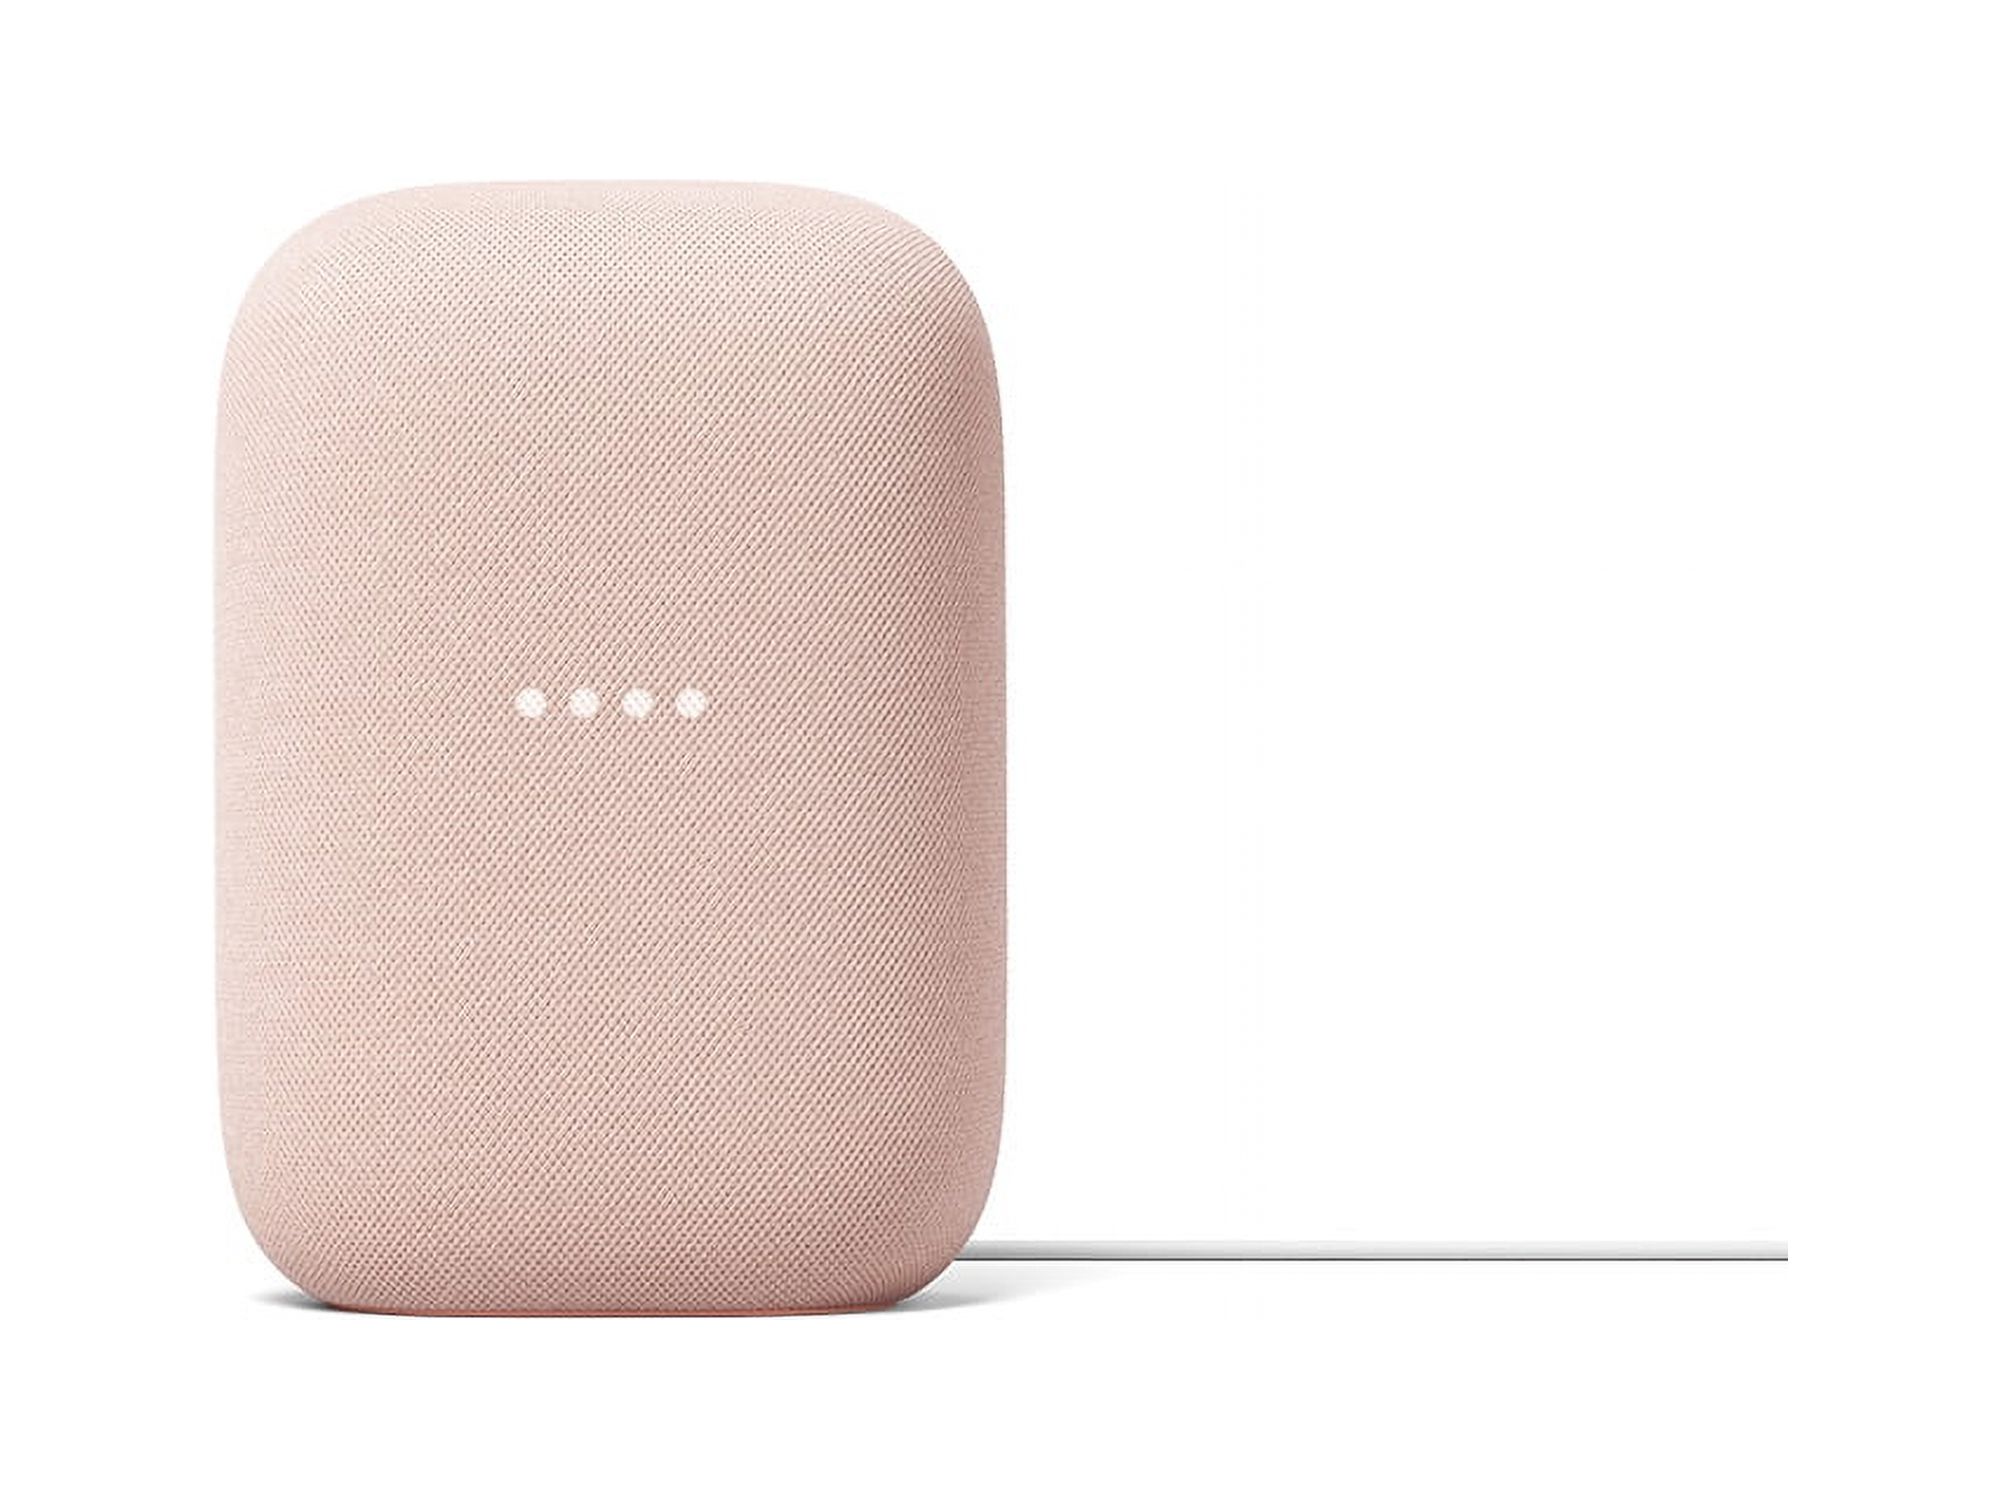 Google Nest Audio - Smart Speaker with Google Assistant - Sand - image 6 of 11